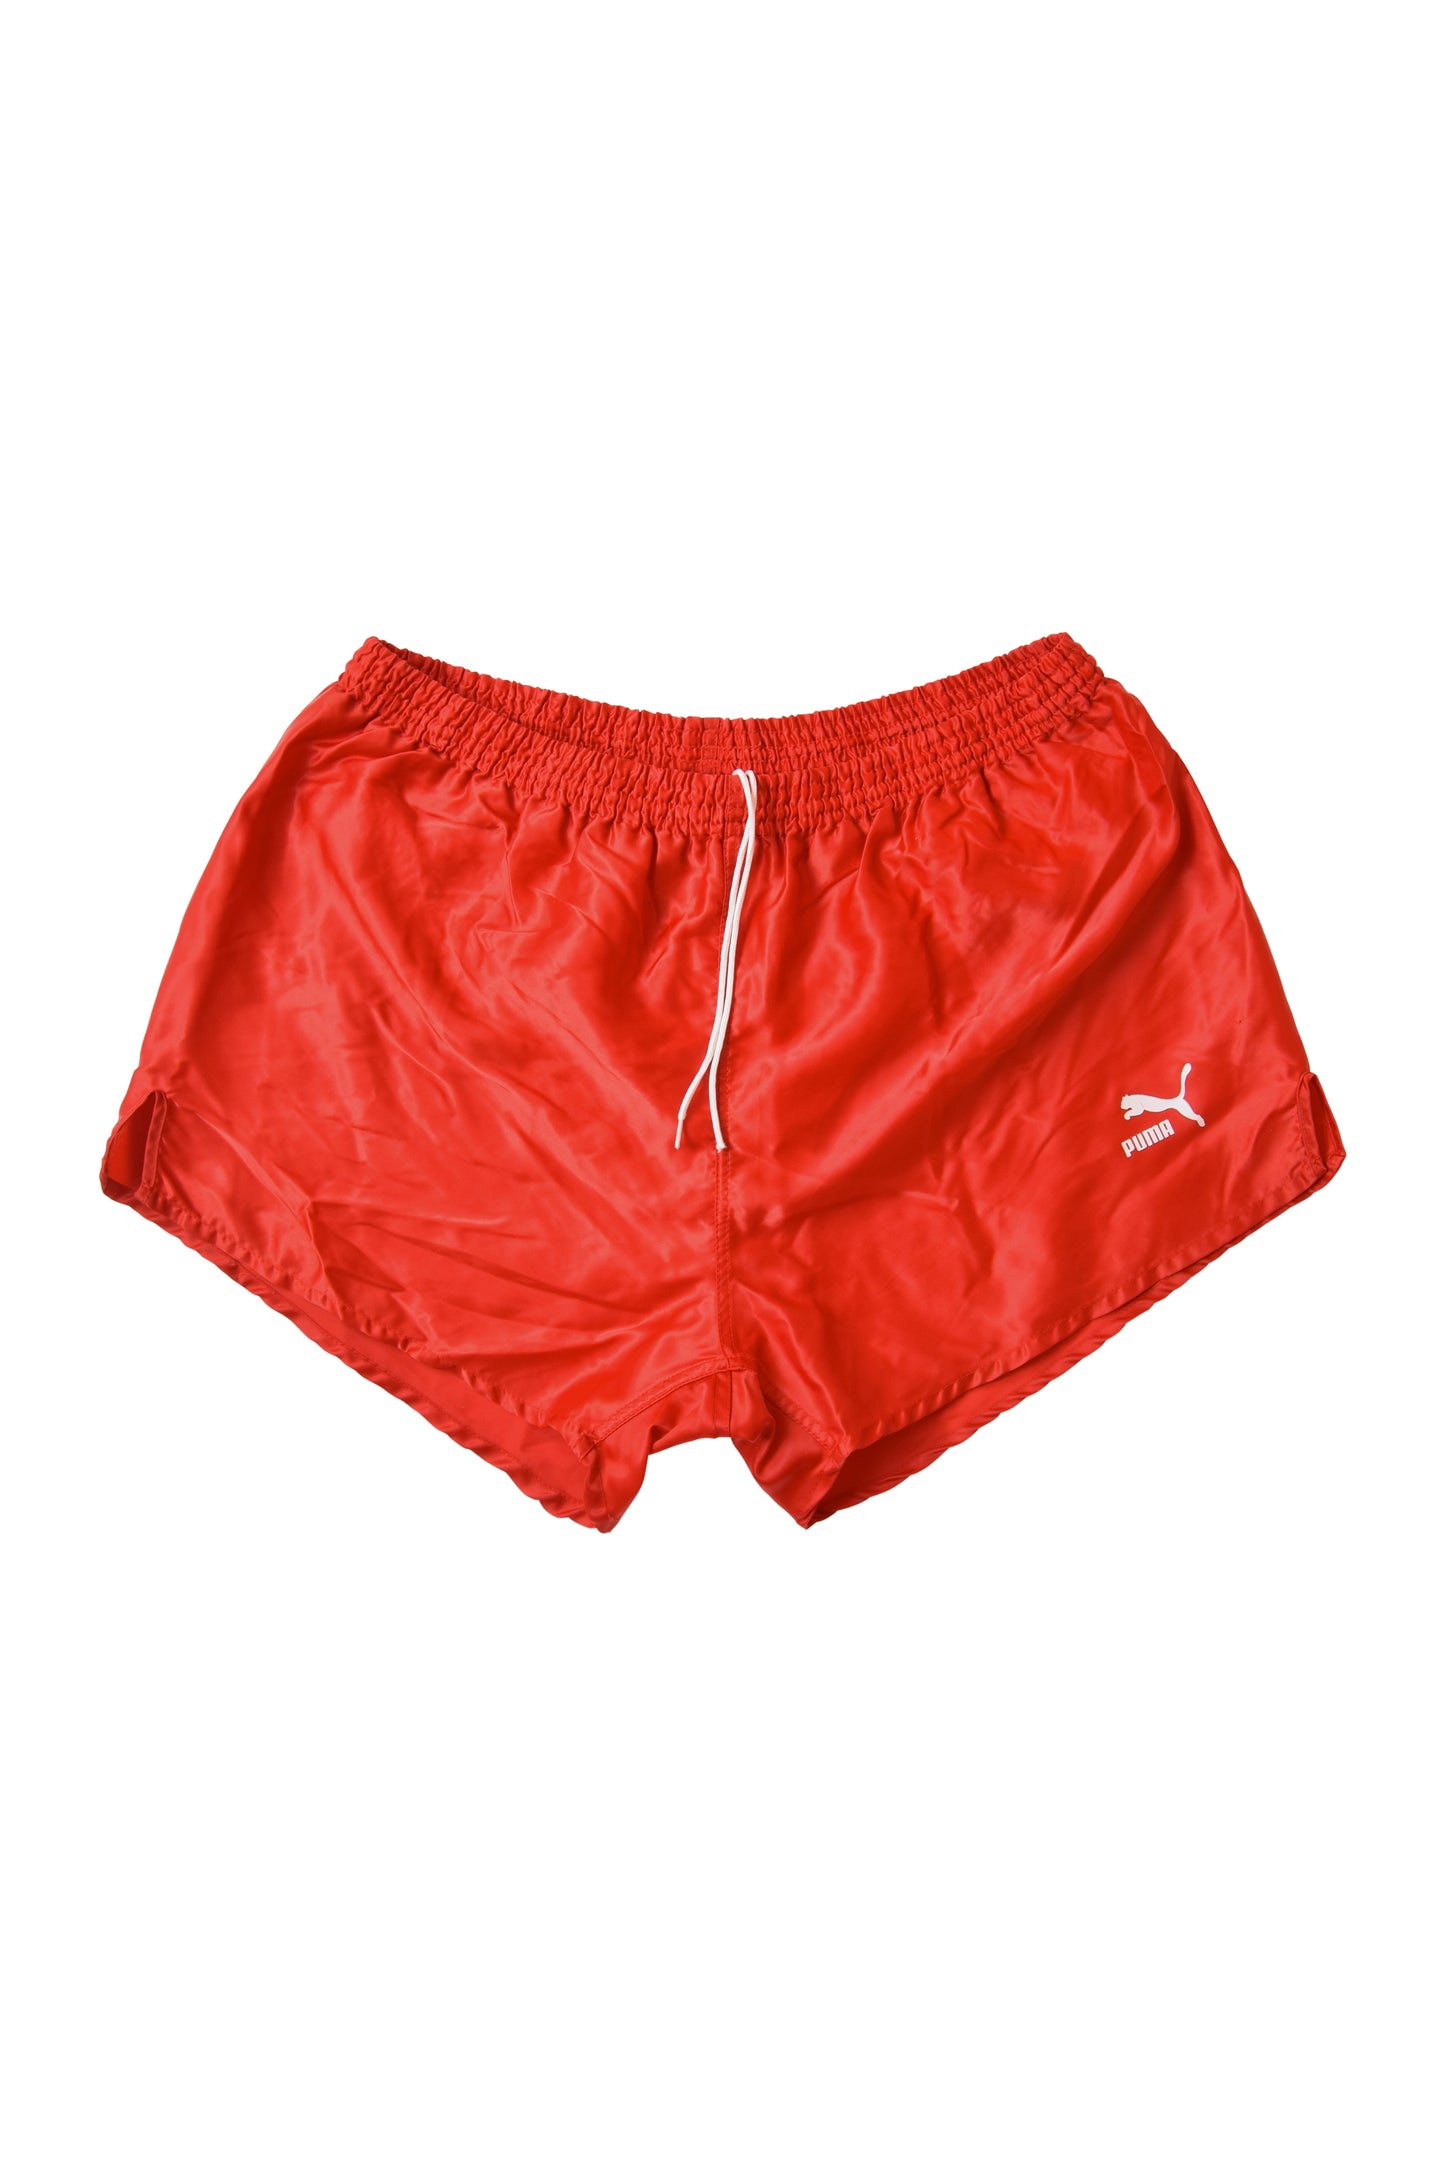 Vintage Puma Festival / Football Shorts Red Size L